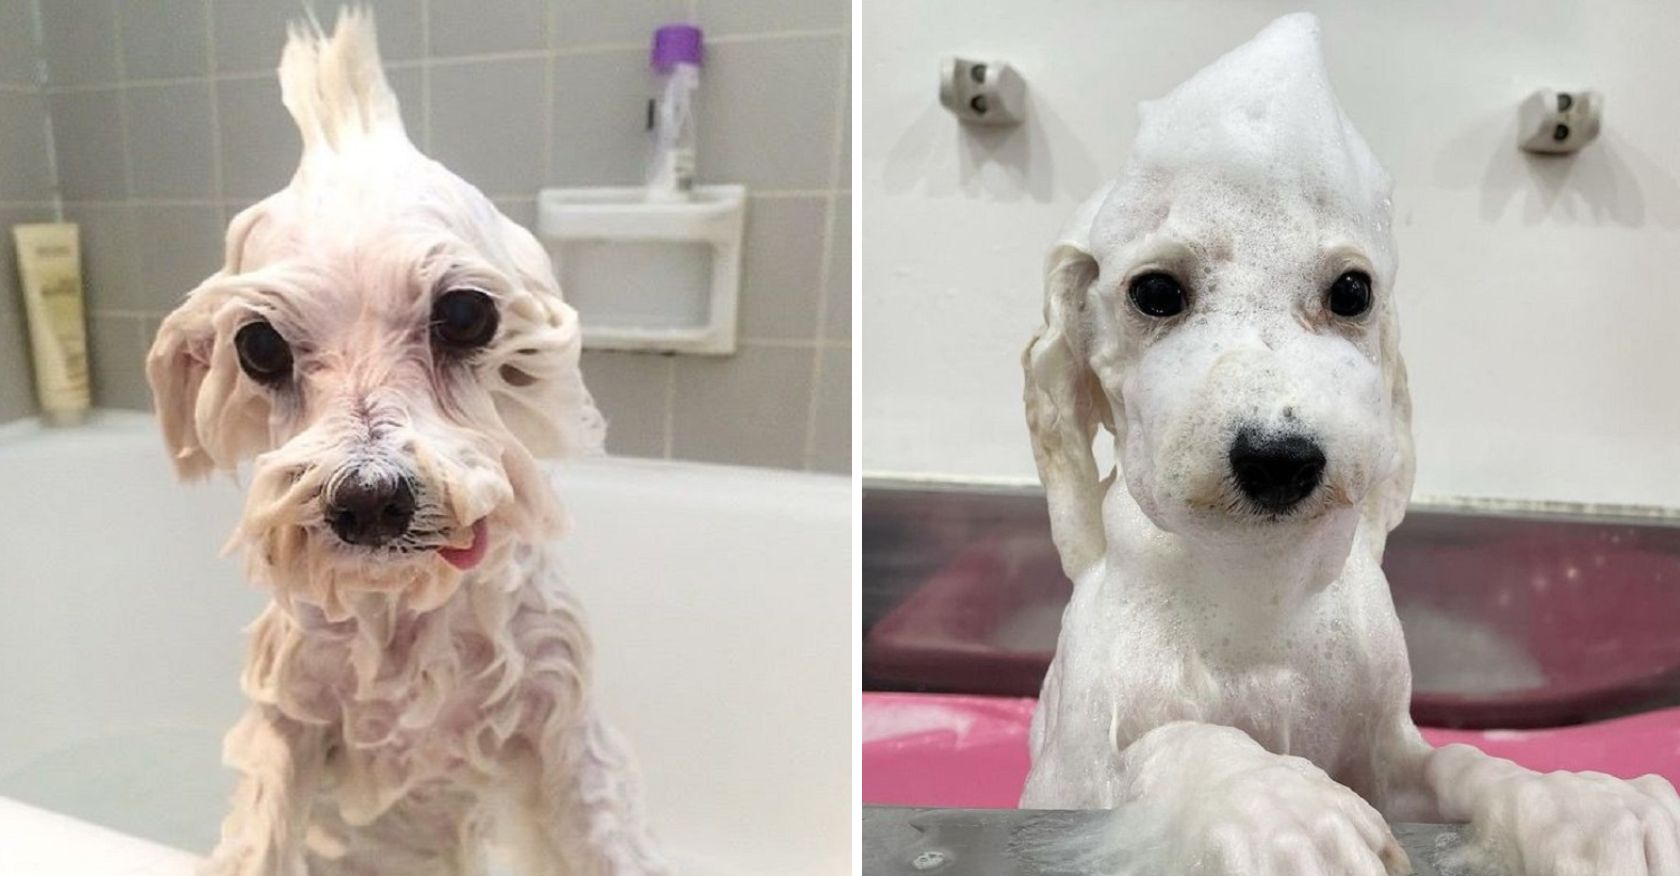 Splish-Splash: An Adorable Dog's Bath Time Adventure